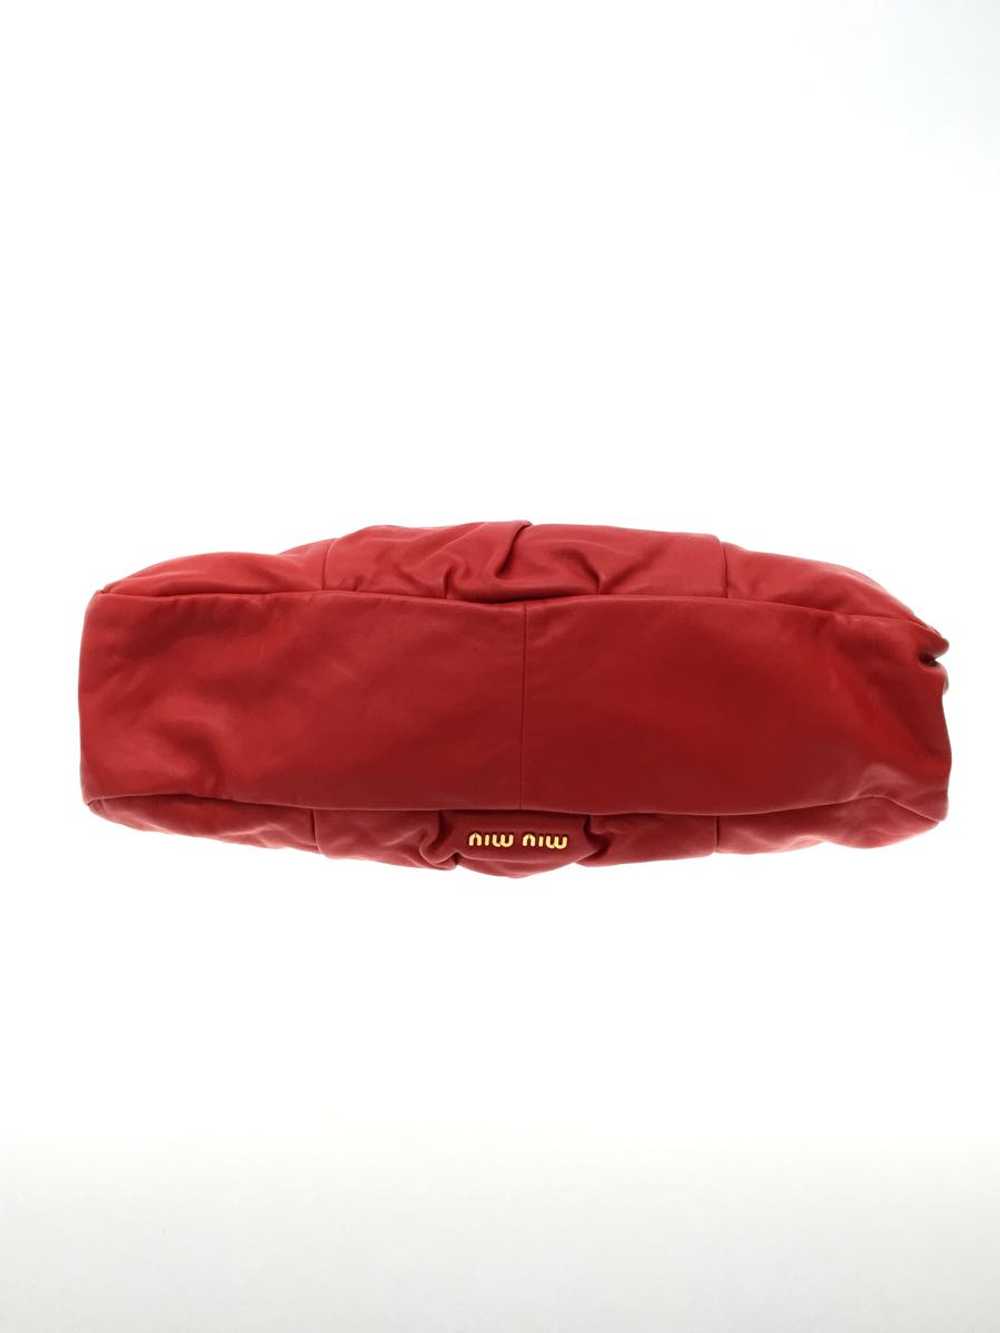 MIUMIU Purse/2Way Shoulder Bag/Leather/Red Bag - image 4